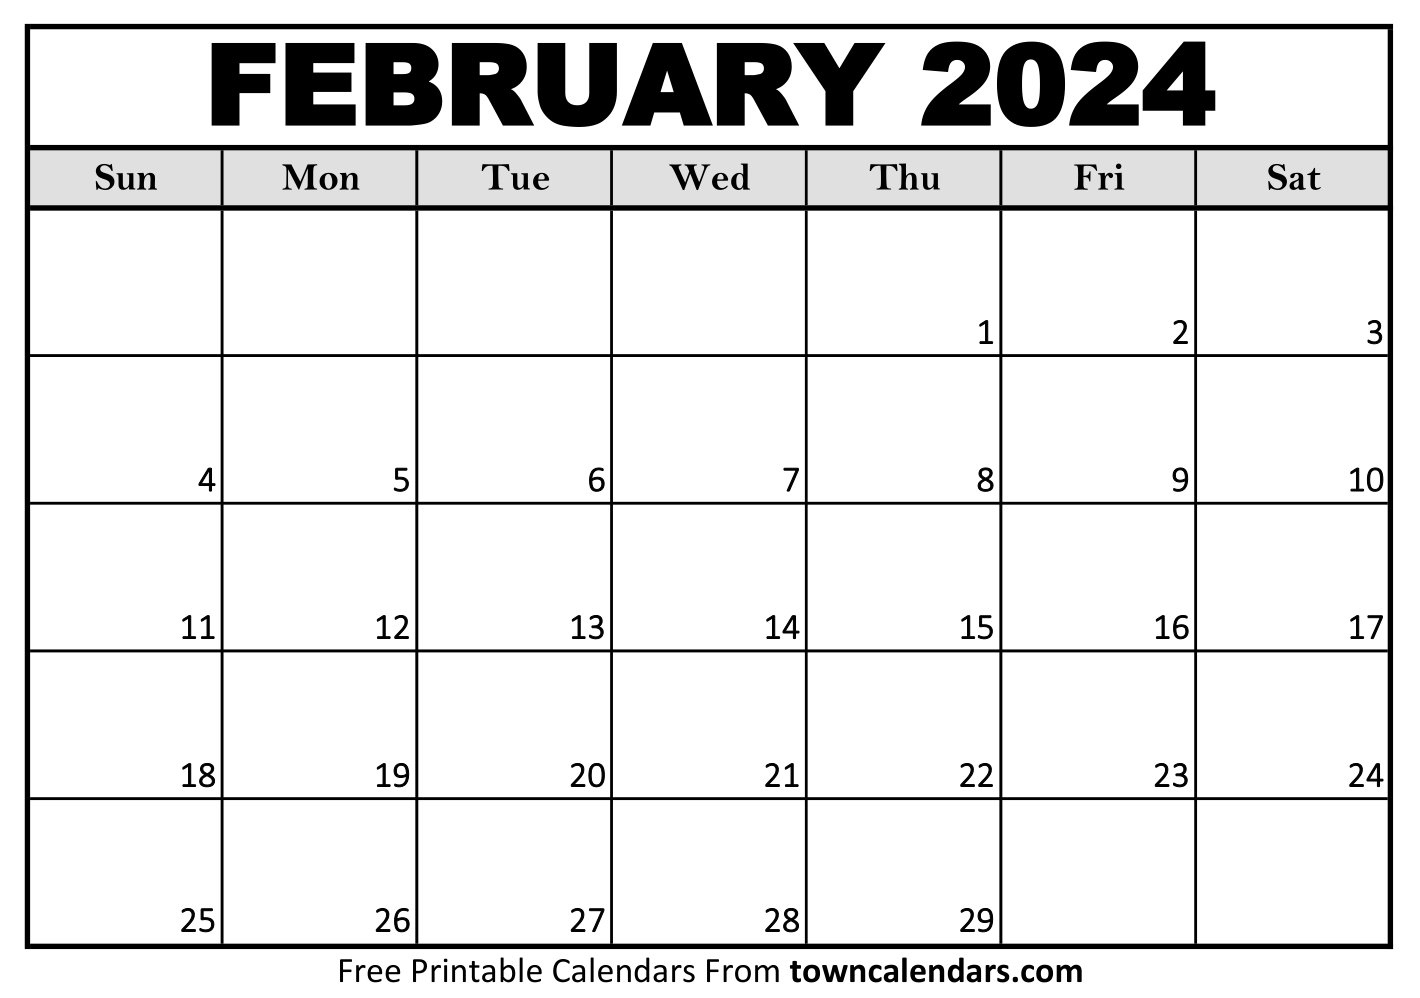 Printable February 2024 Calendar Towncalendars | Free Printable 2024 Calendar From Towncalendars